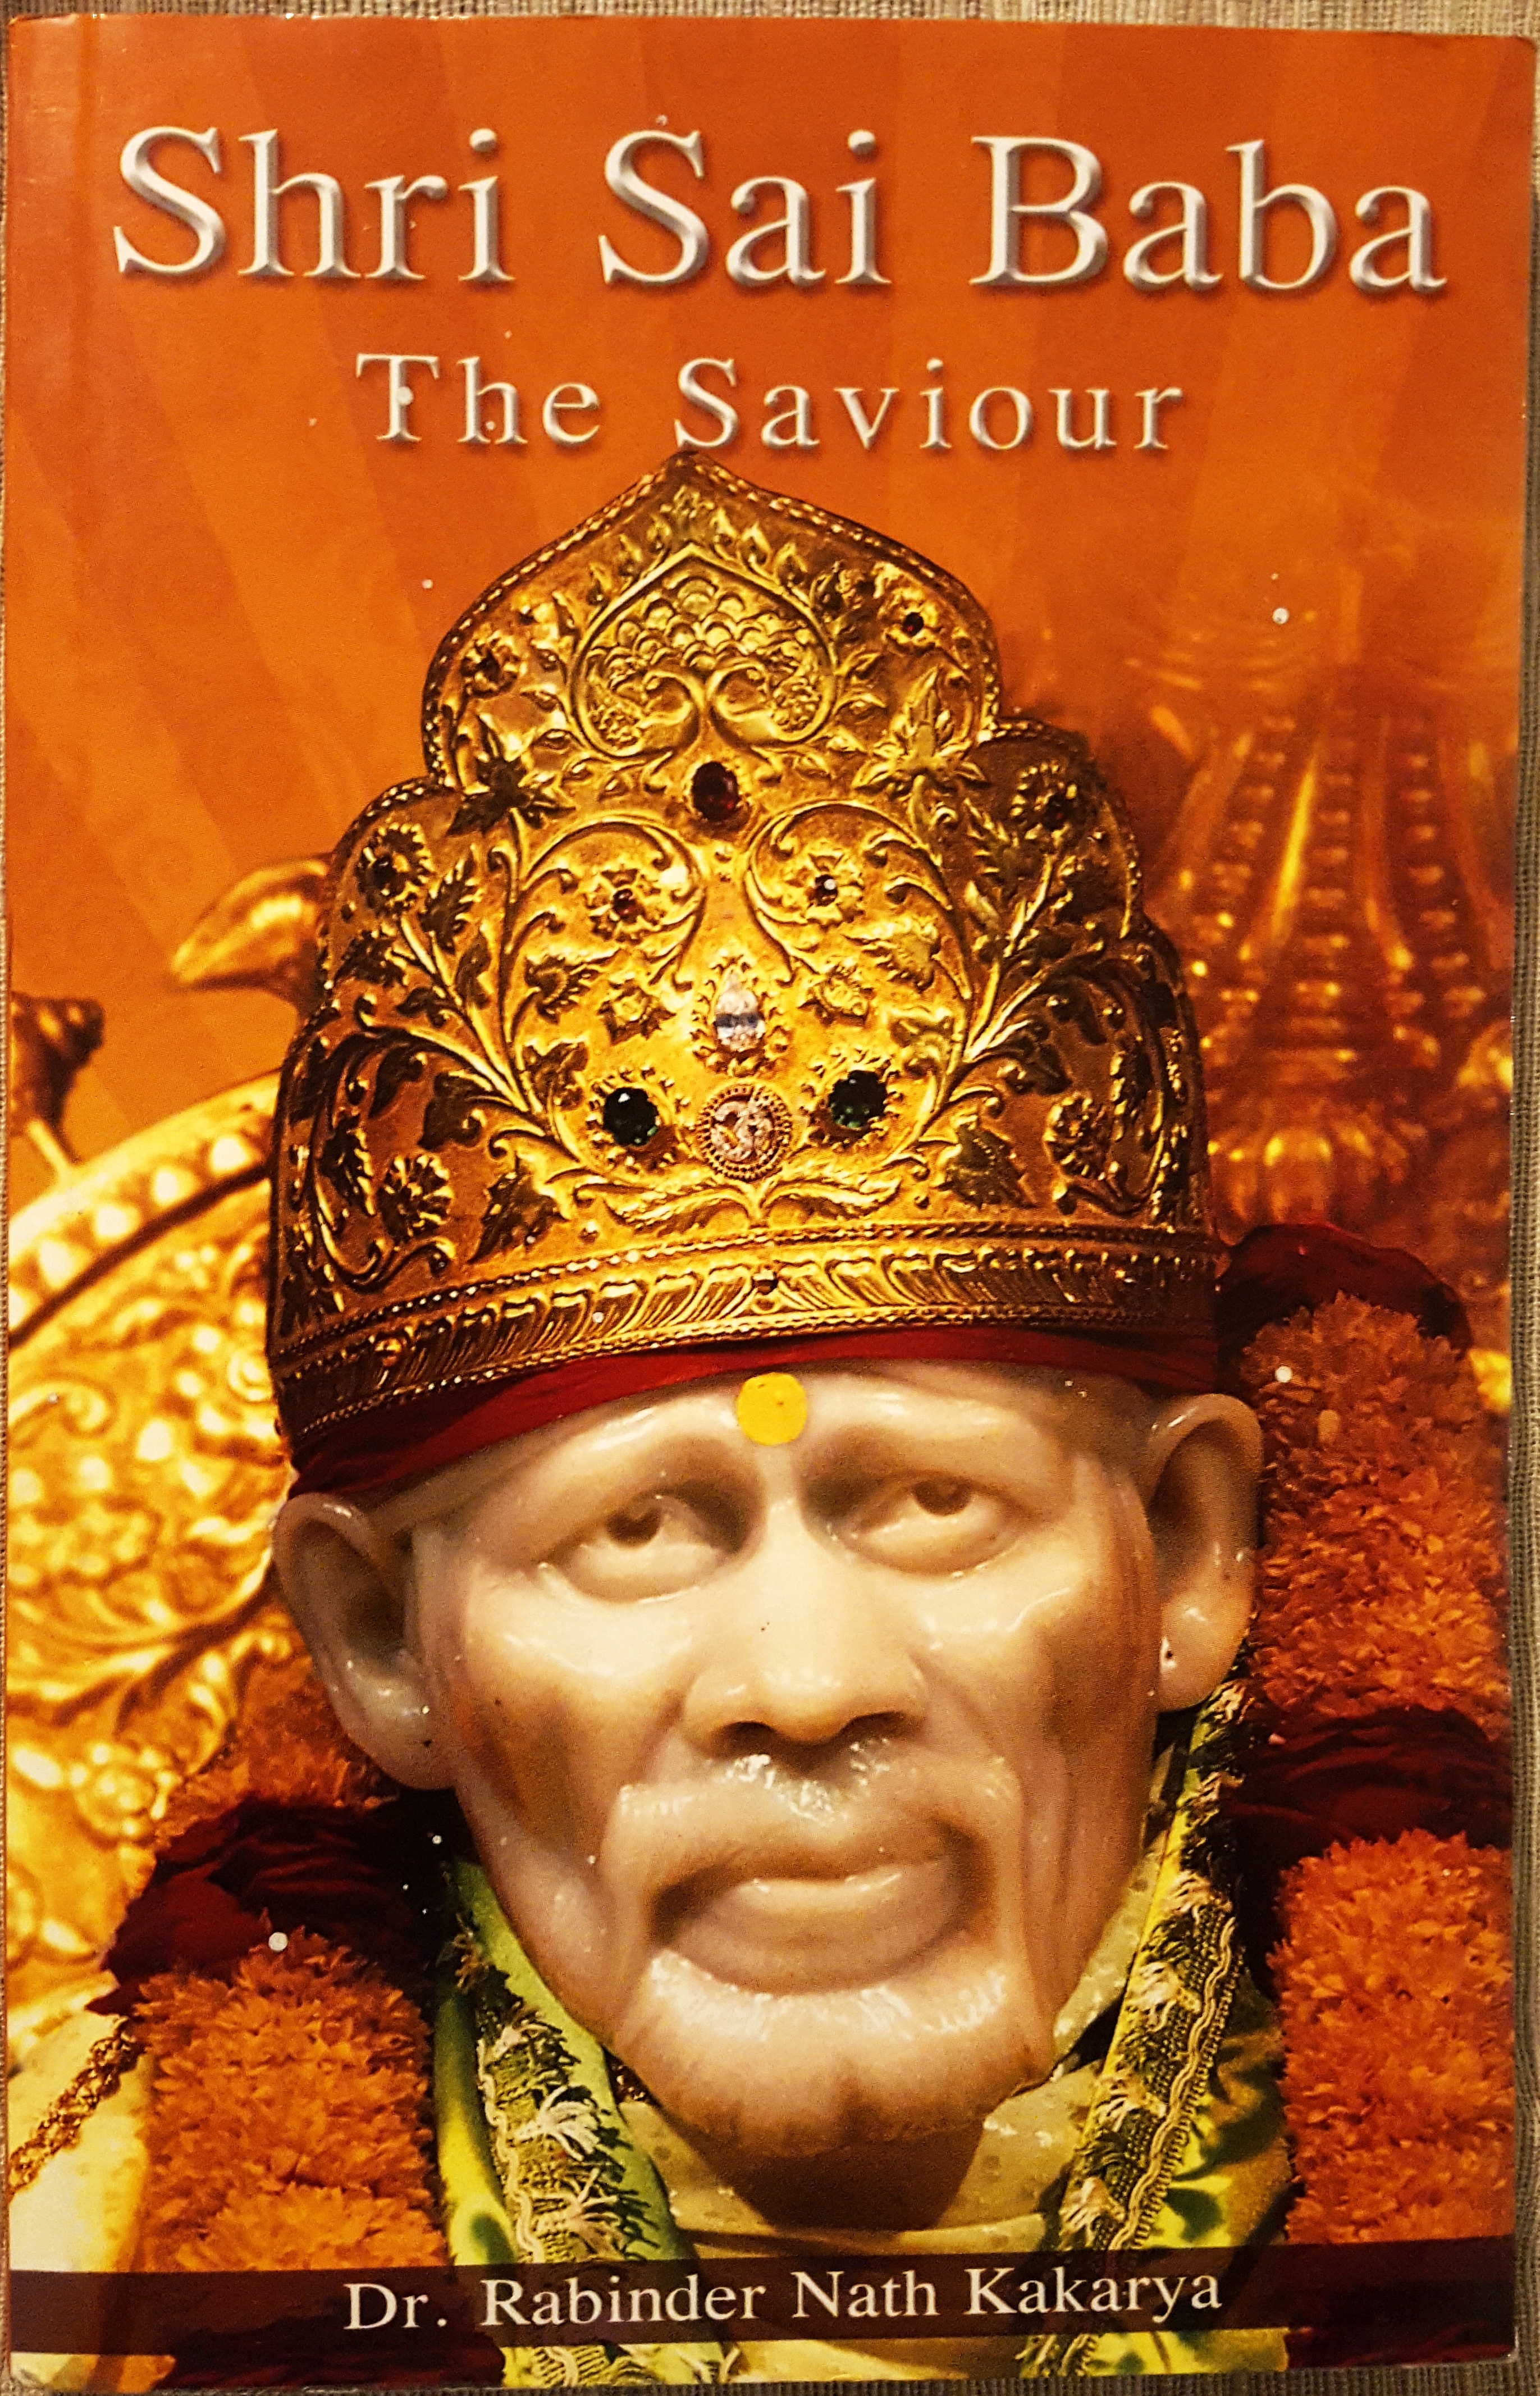 Shirdi Sai Baba Temple Frankfurt Germany (Deutschland) recommended book - Shri Sai Baba - The saviour .